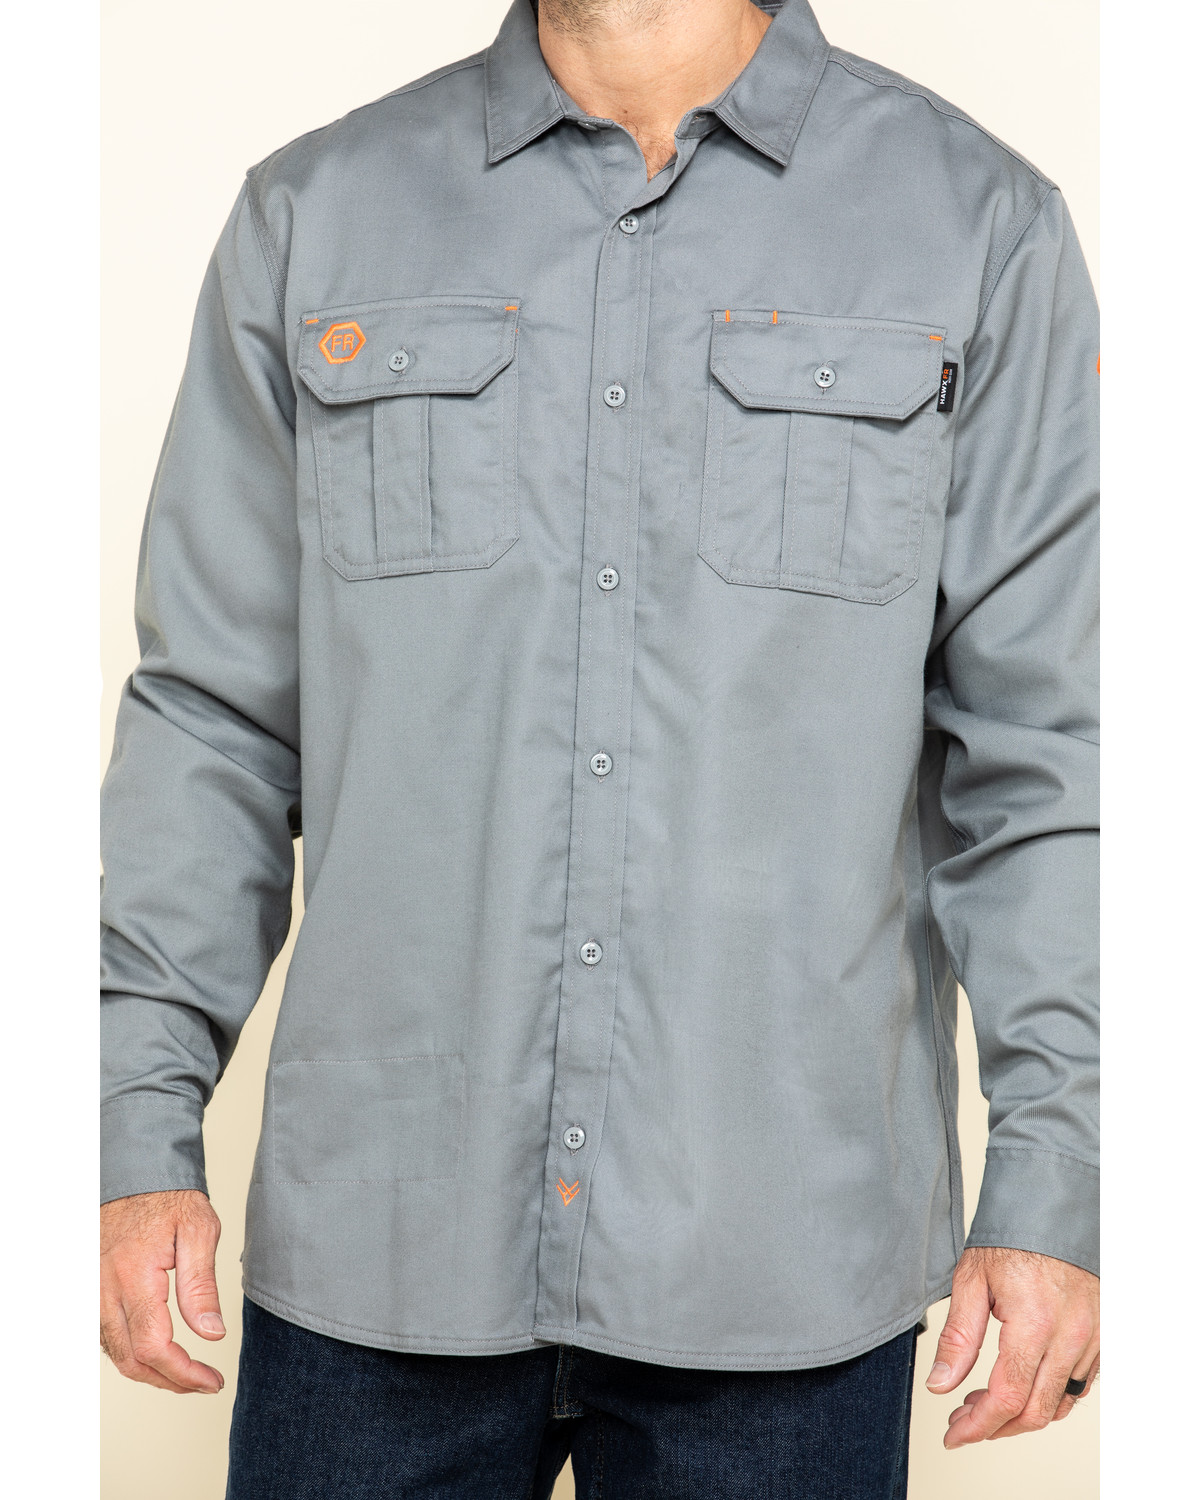 Hawx Men's Grey FR Long Sleeve Work Shirt - Big | Sheplers